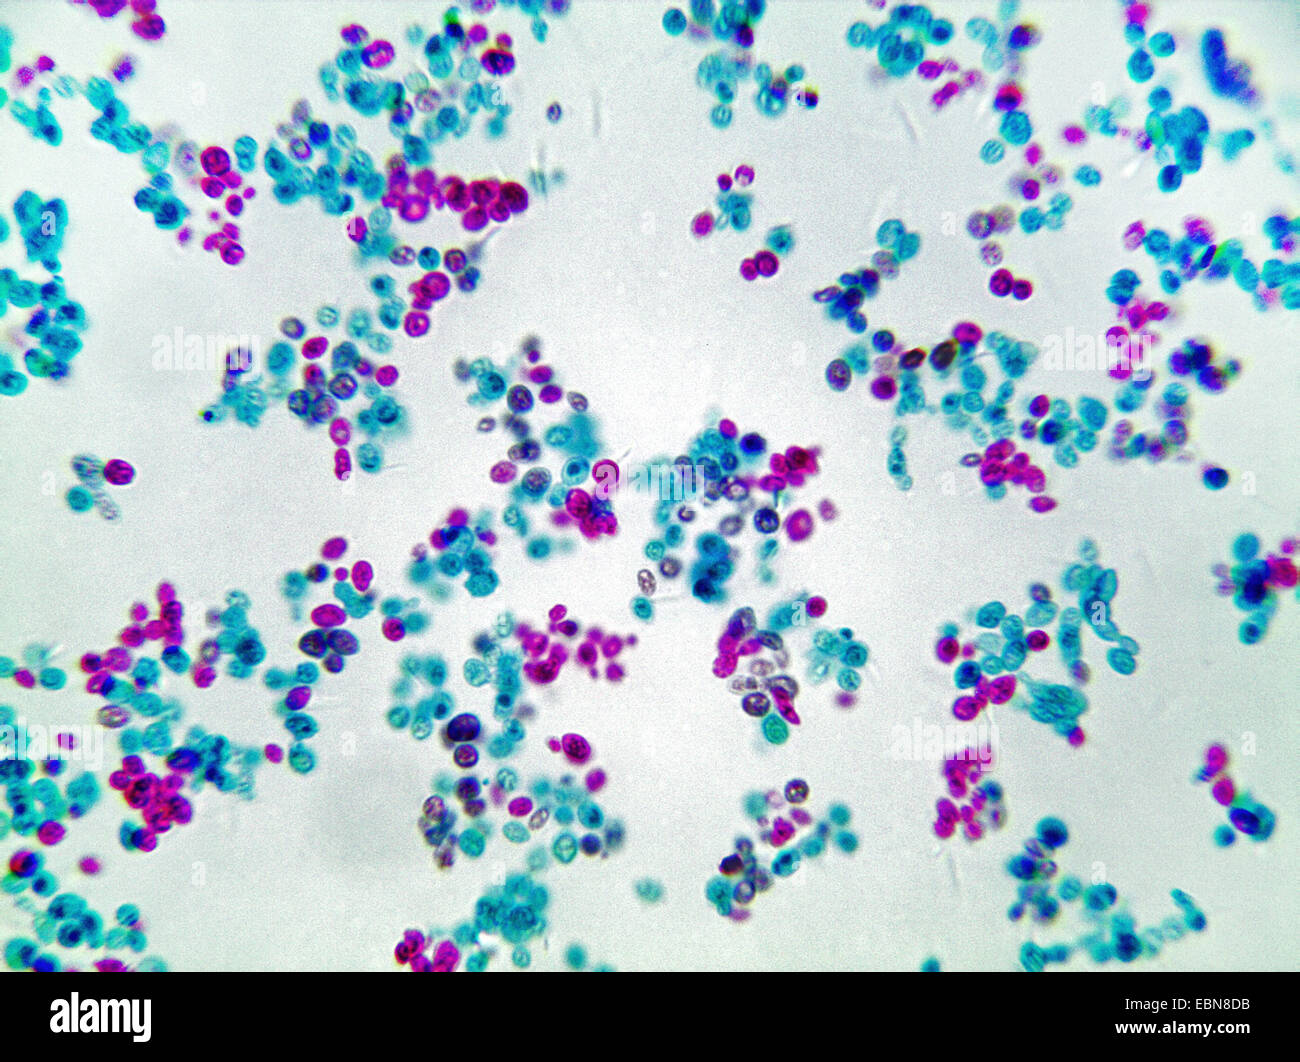 yeast cells, 1000 x Stock Photo